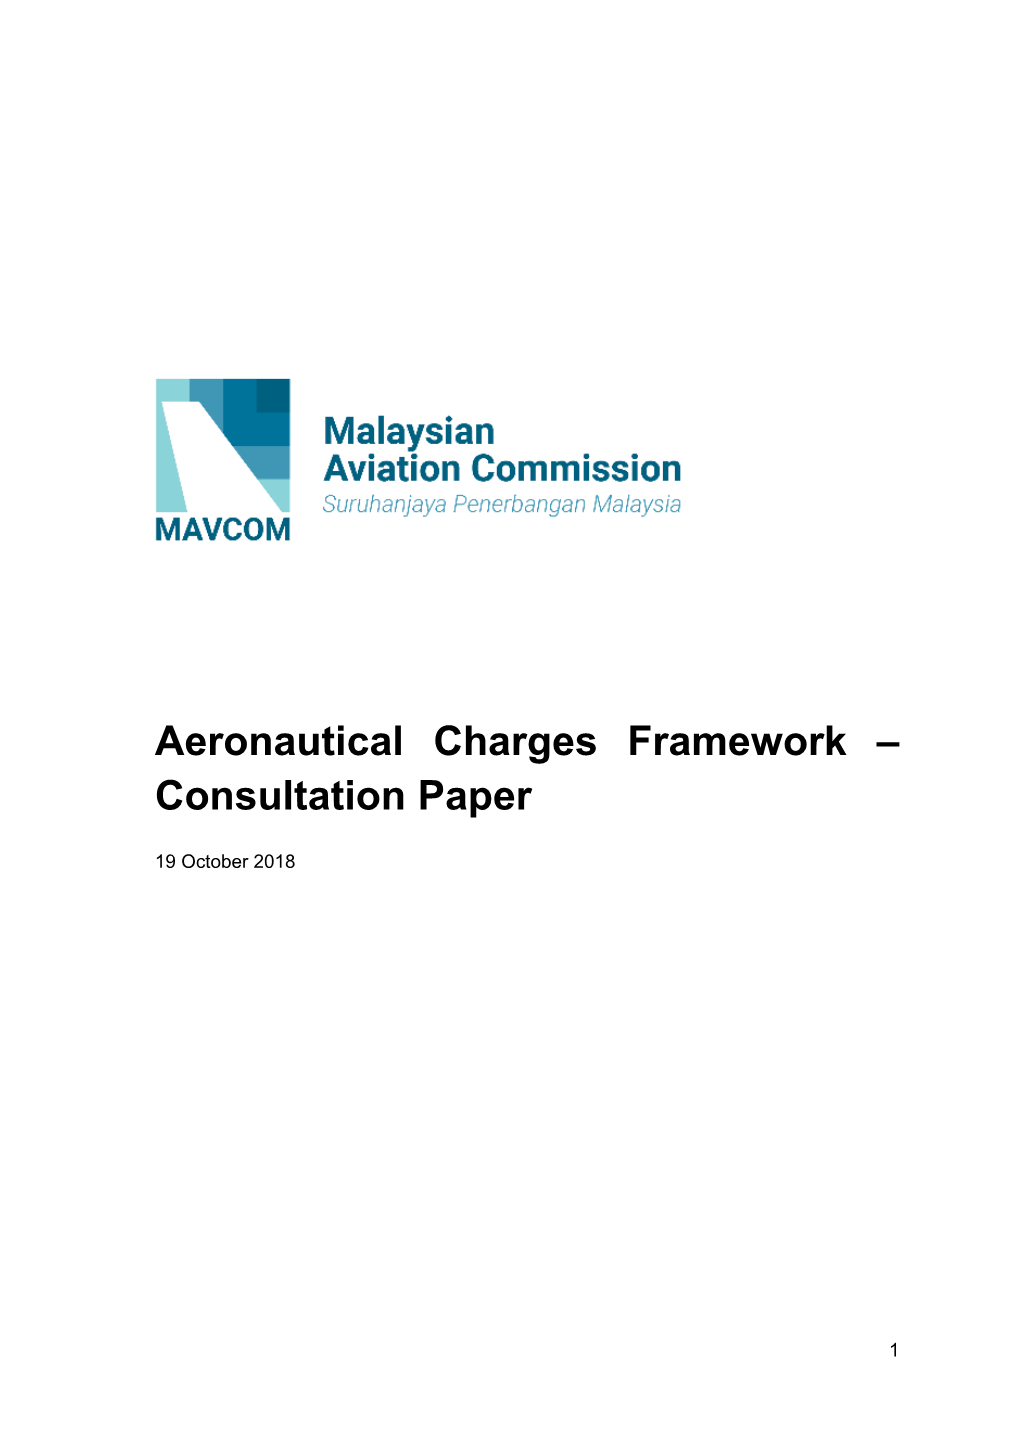 Consultation Paper on Aeronautical Charges Framework